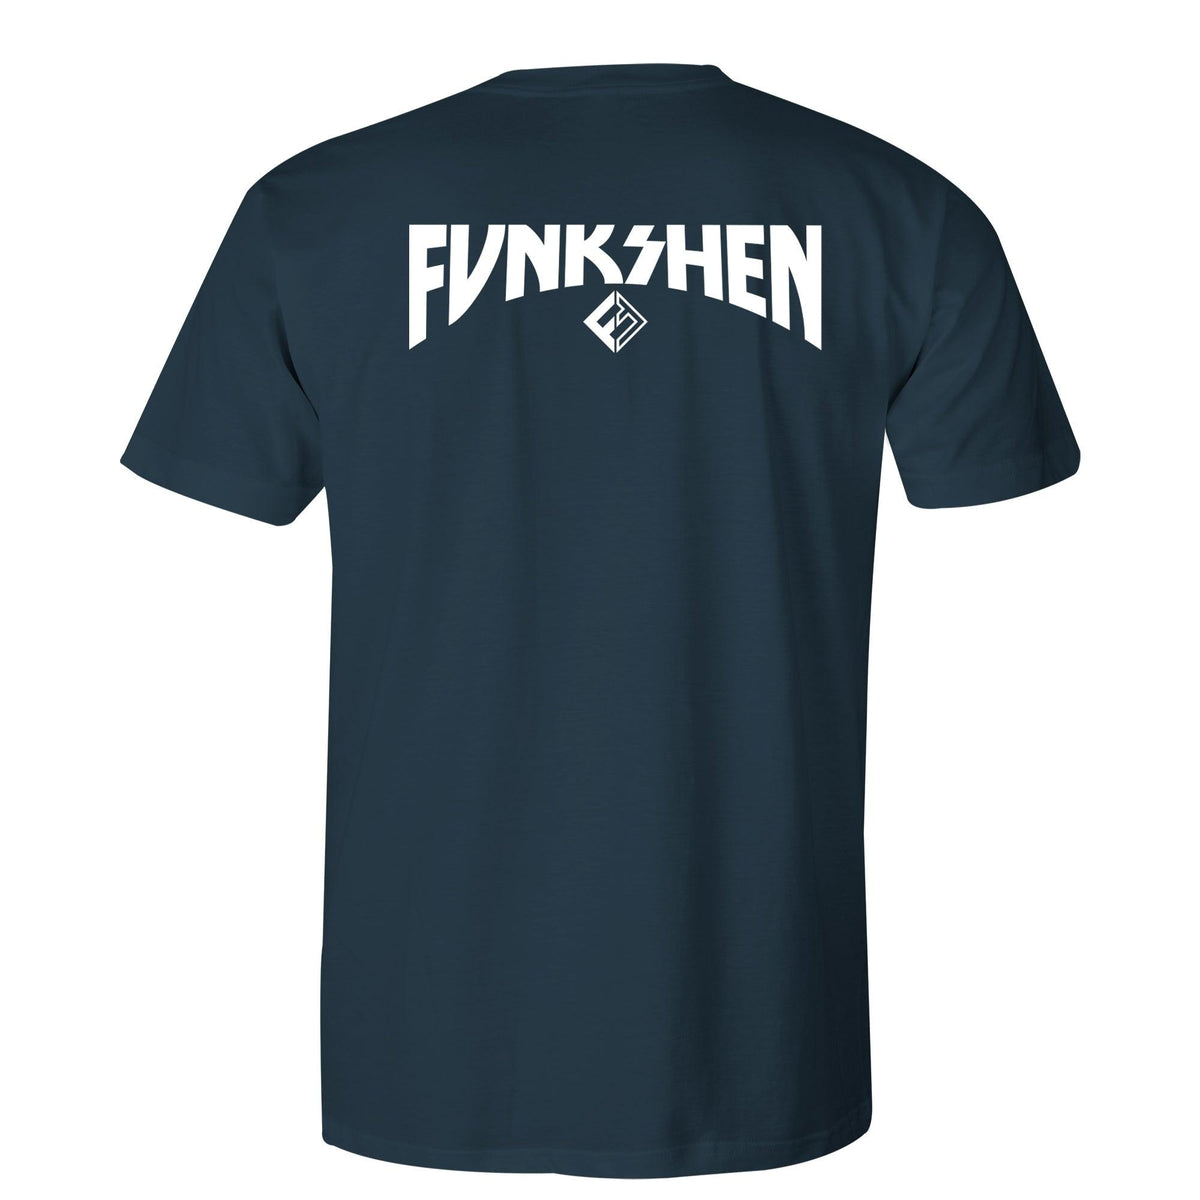 Funkshen KAOS T-Shirt - Iodine Blue - Funkshen Bodyboards